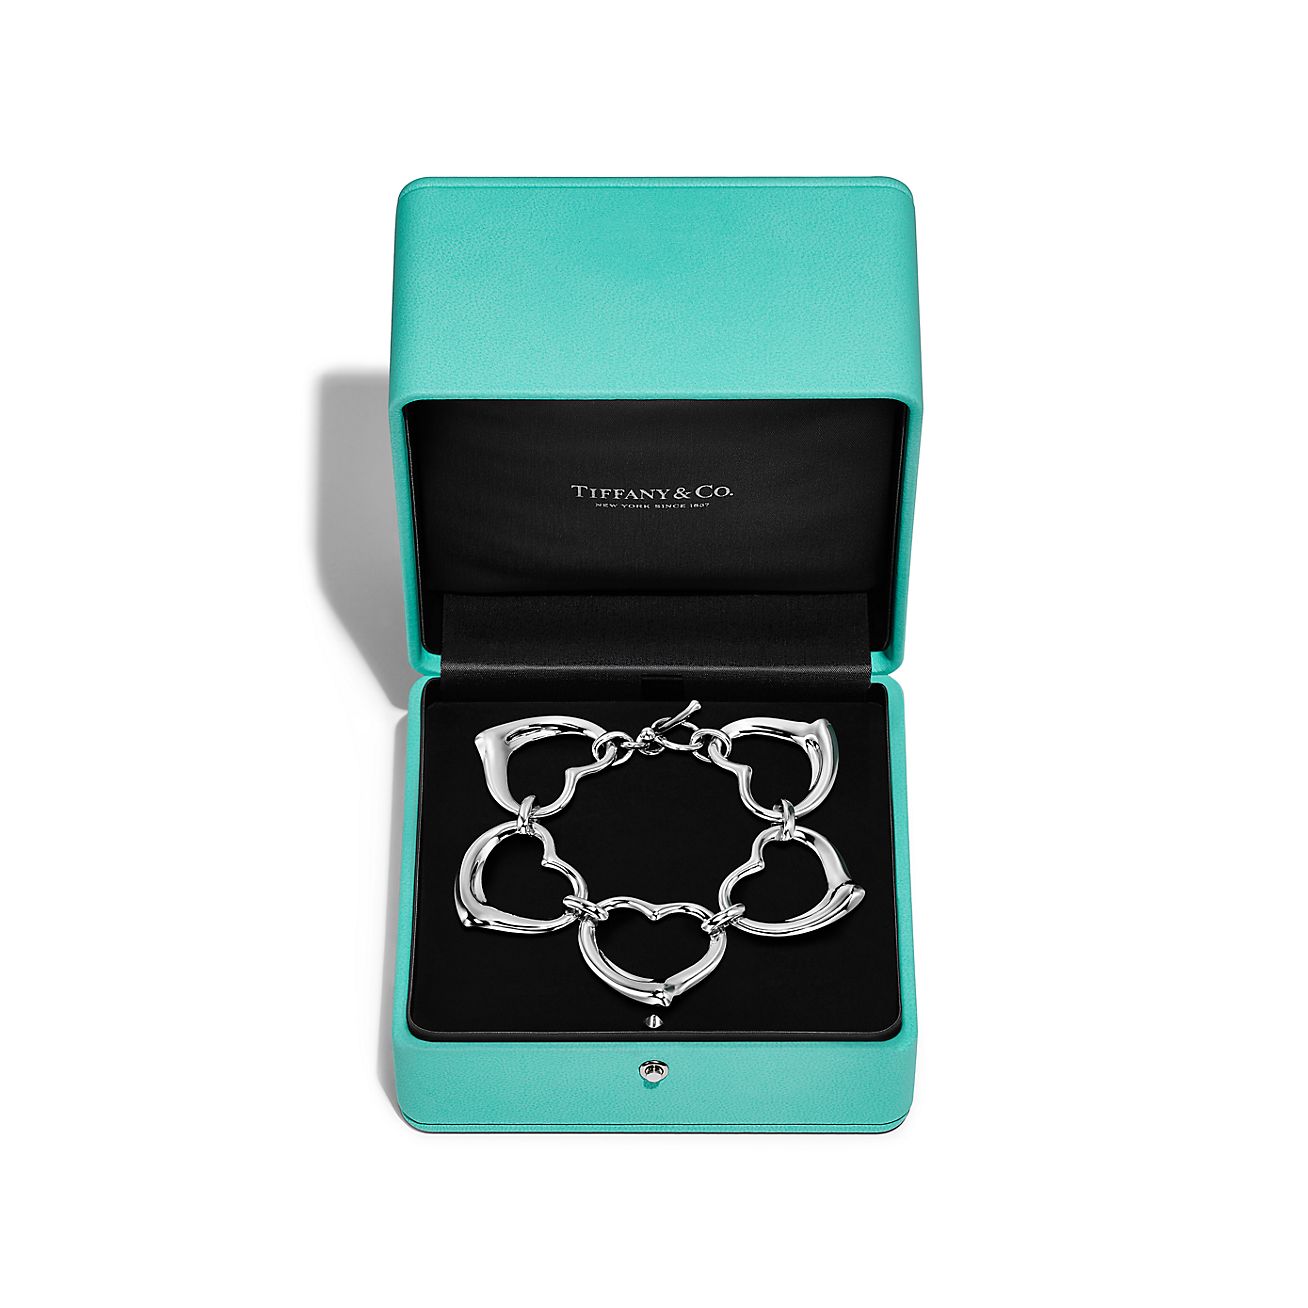 Tiffany & Co Toggle Bracelet 8.25 Heart Shopping Bag Charm